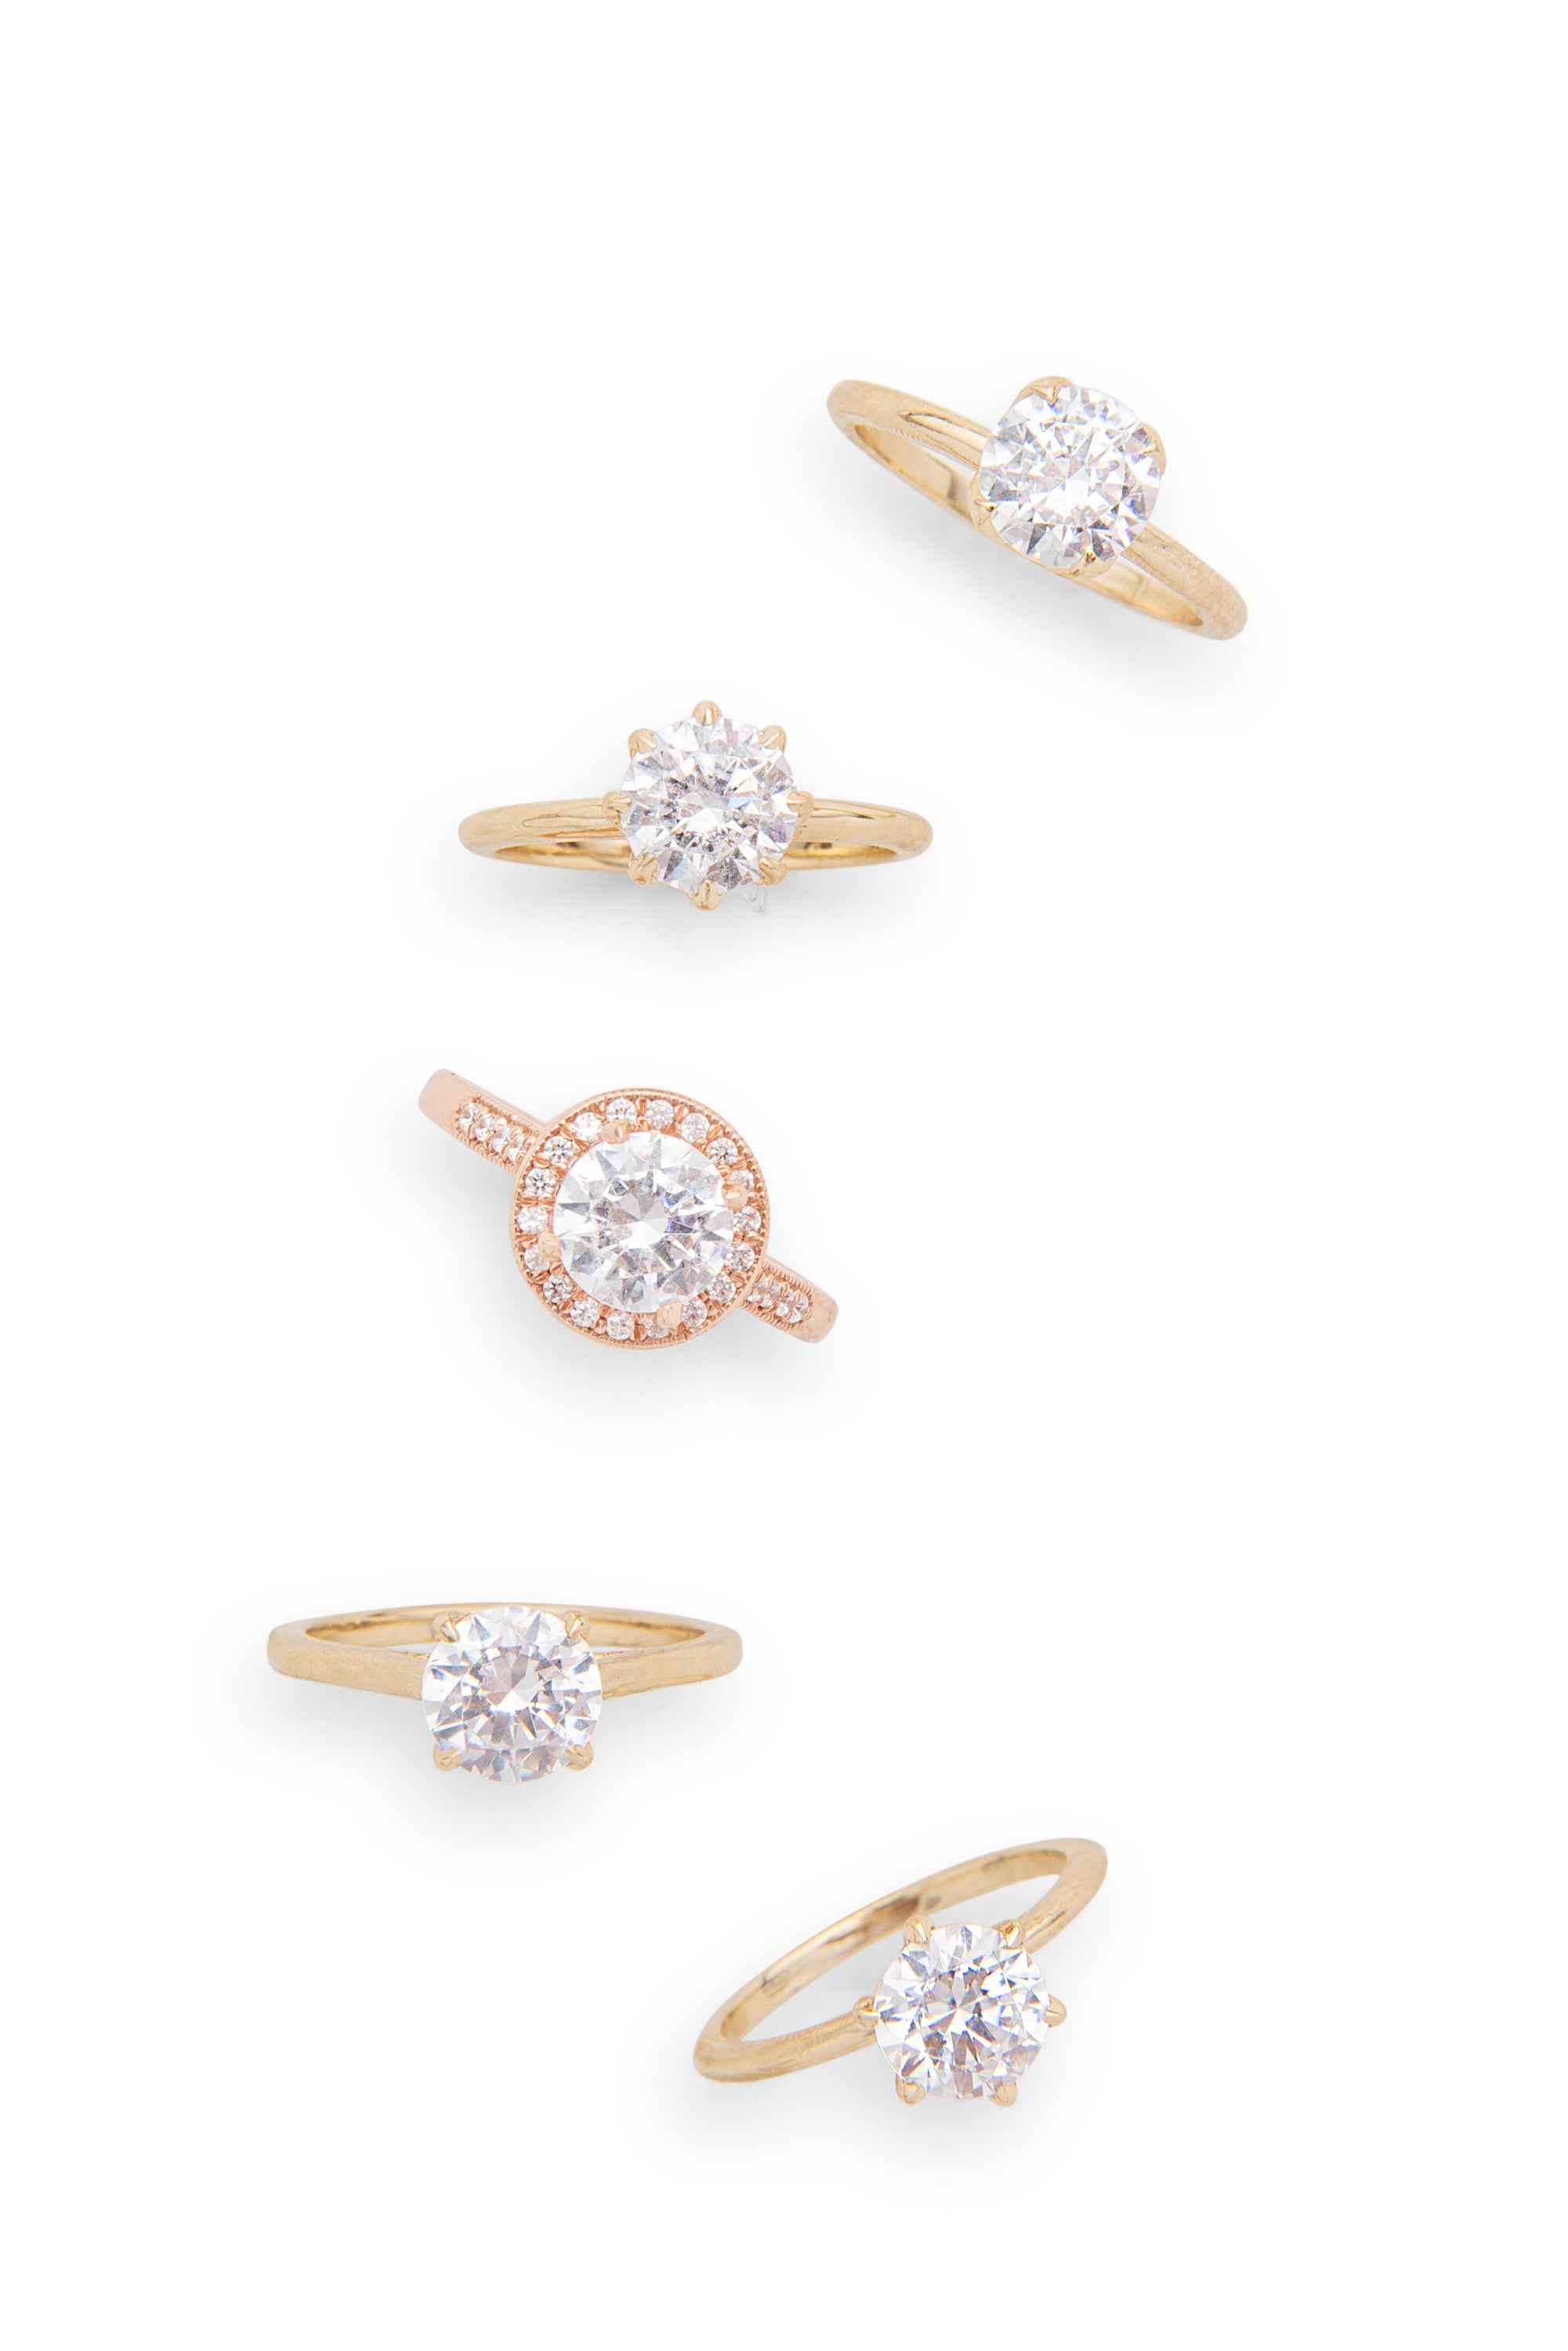 Rings | Diamond Rings Online | Best Diamond Rings For Women – tagged  